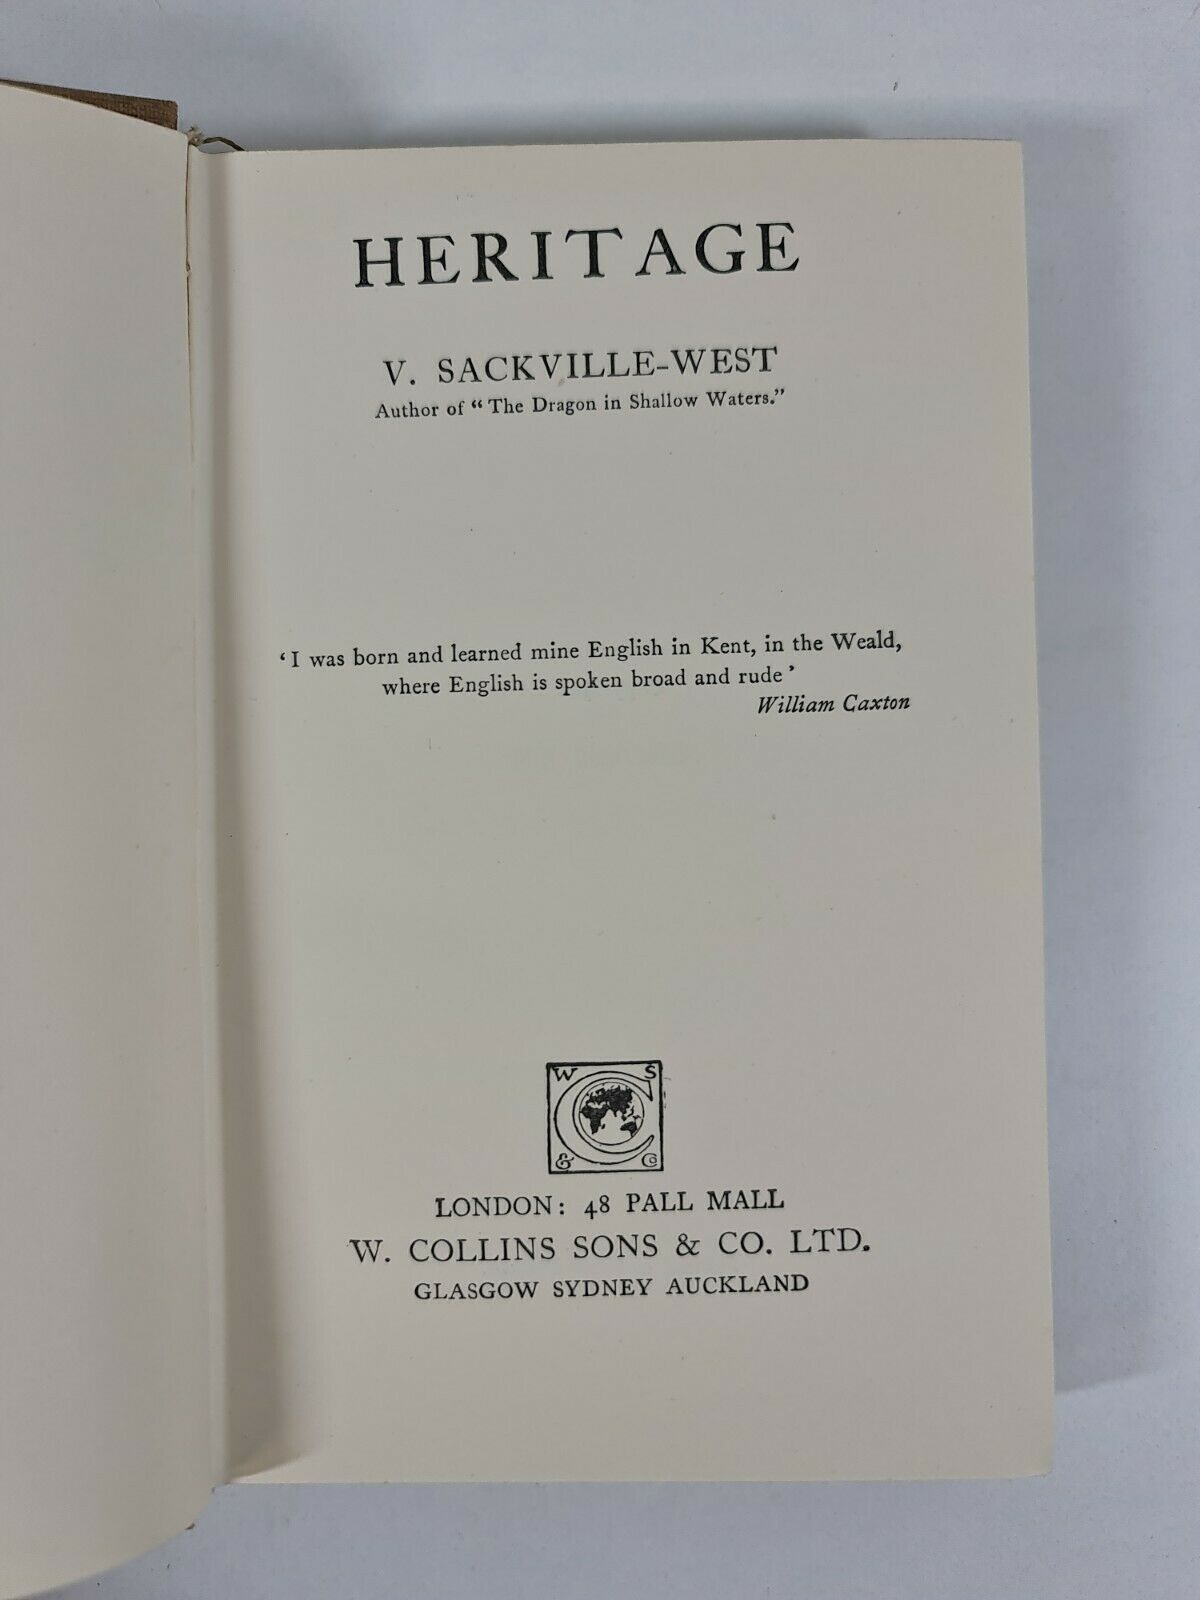 Heritage by V. Sackville-West